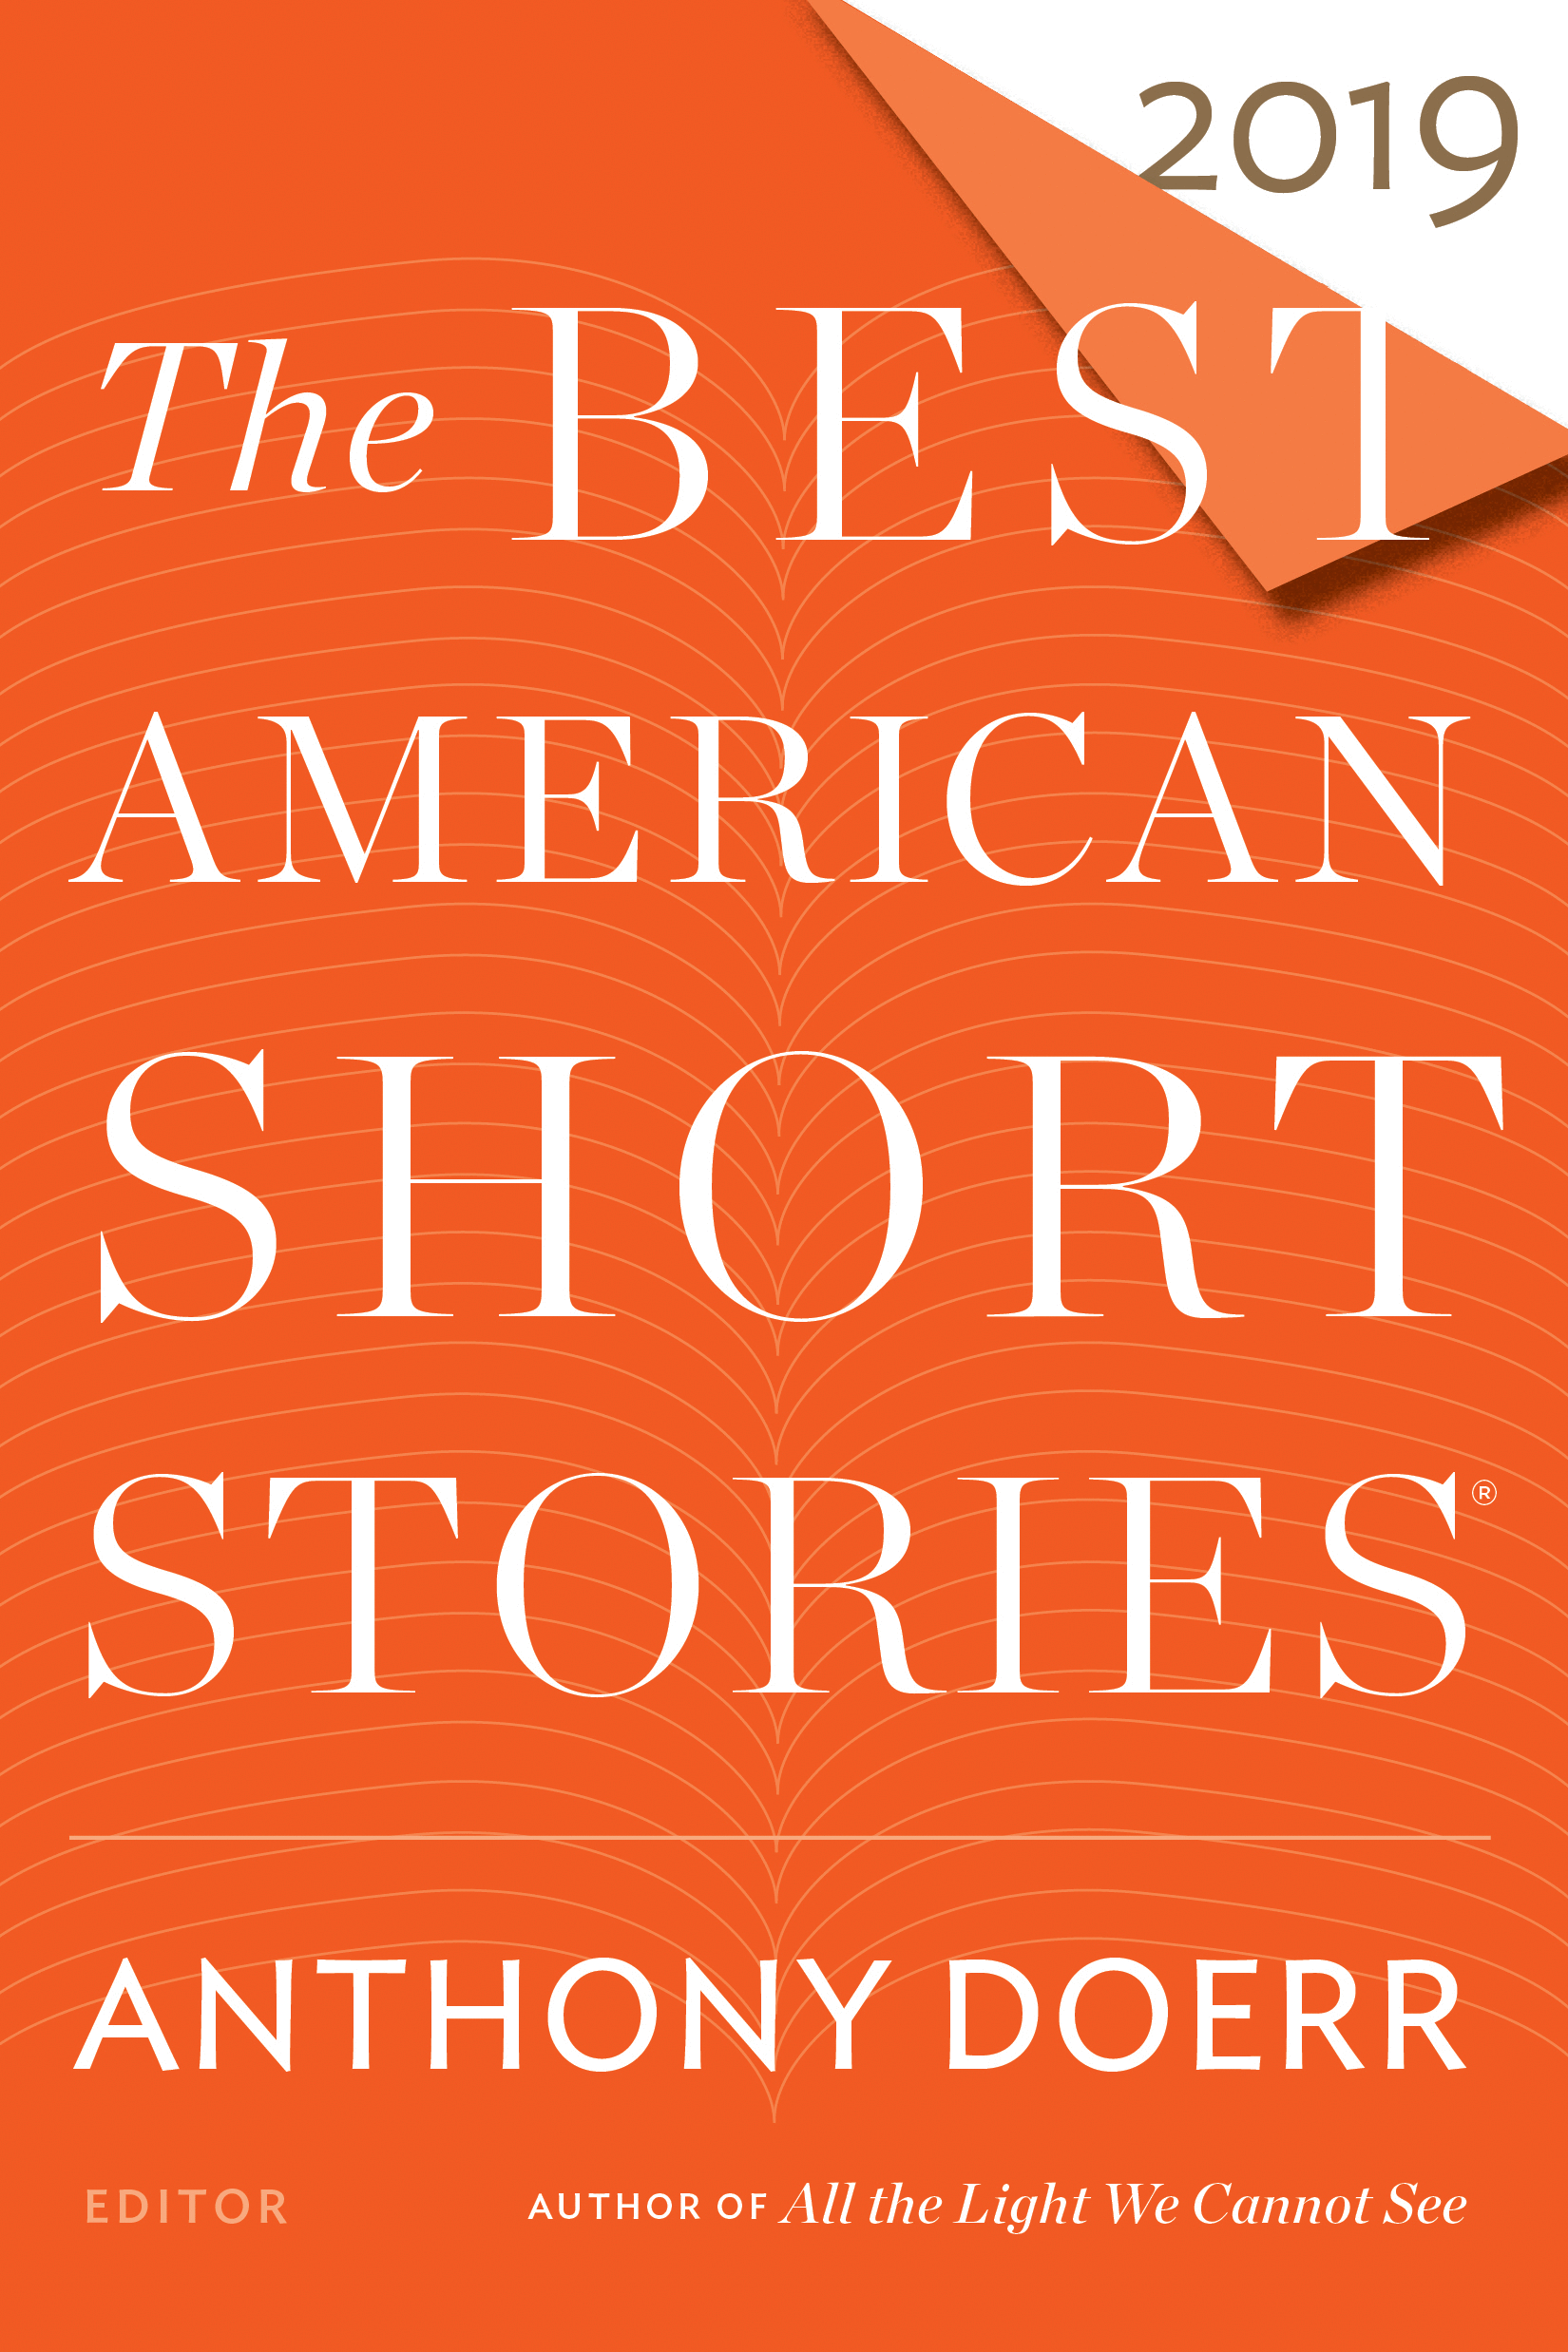  Maria Reva selected for <em>The Best American Short Stories 2019</em>